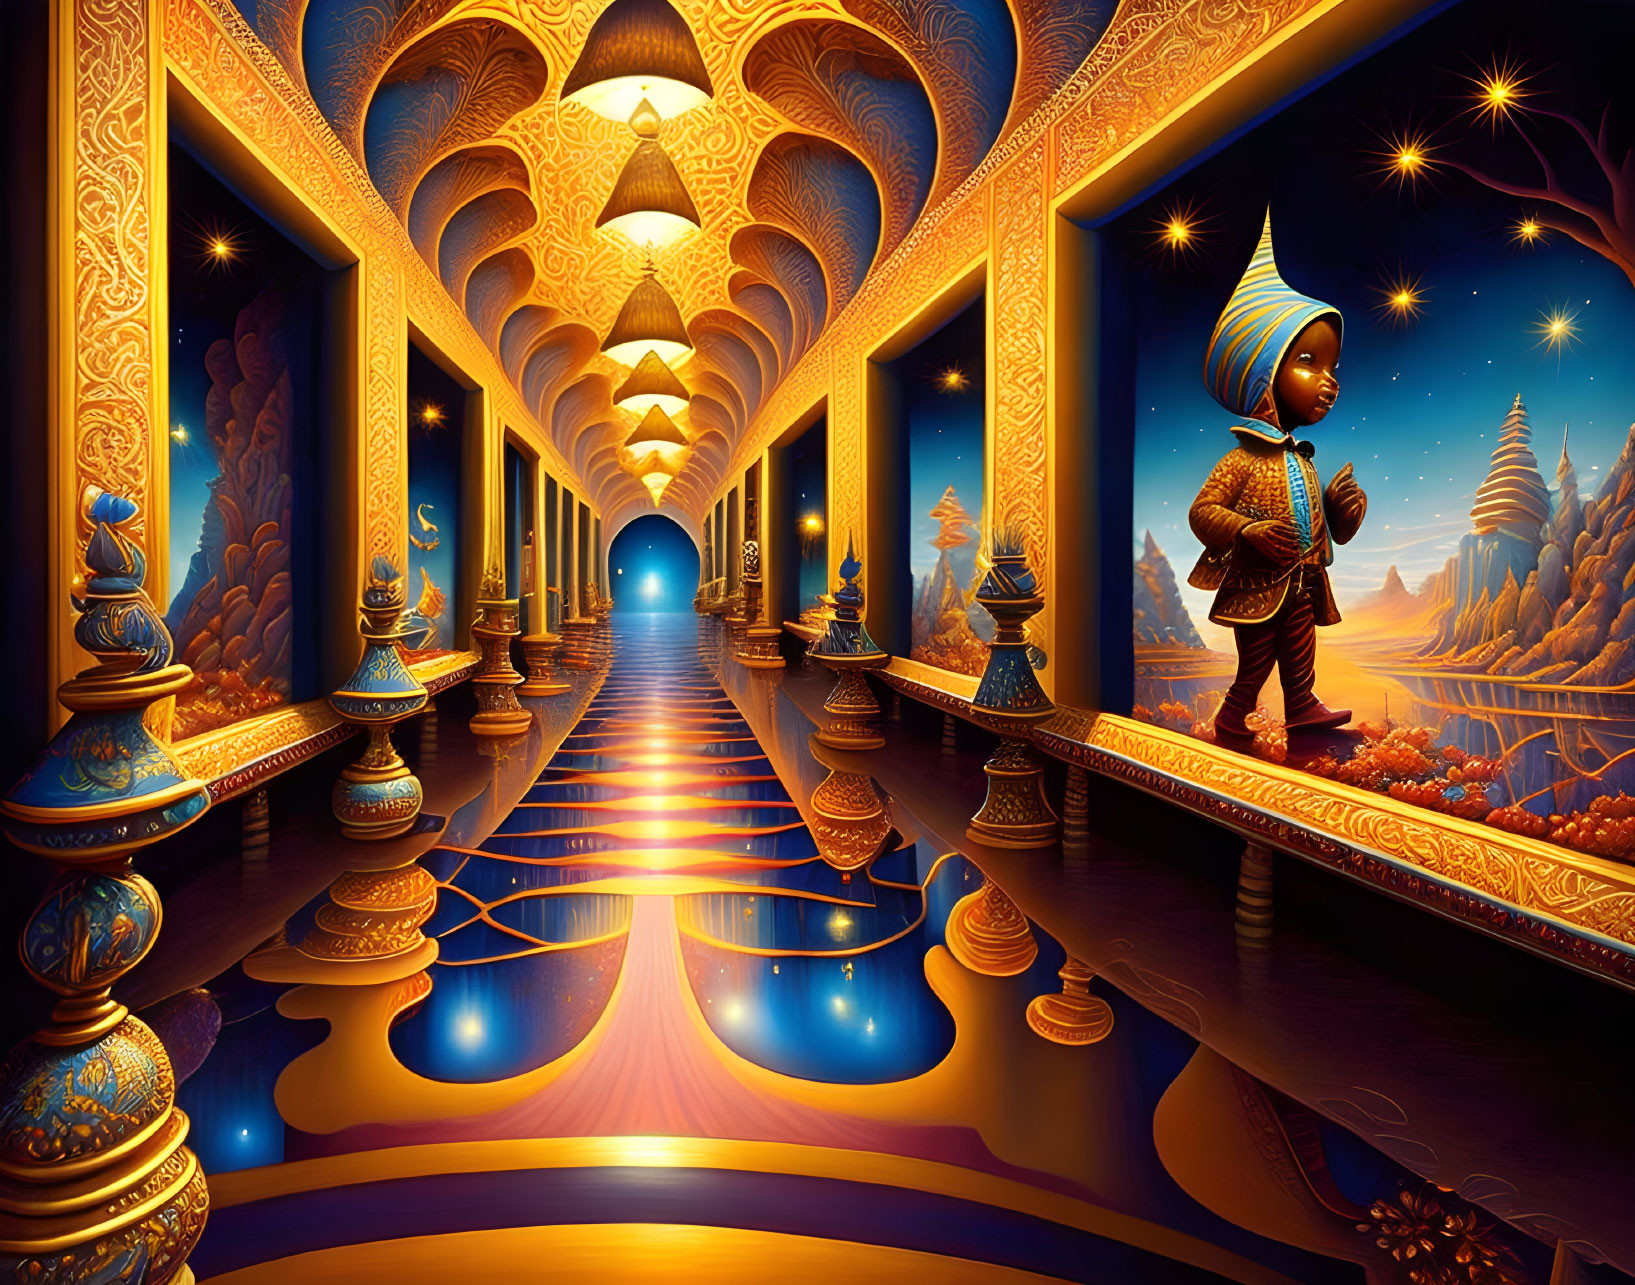 Digital artwork of ornate corridor with starry skies & solitary figure